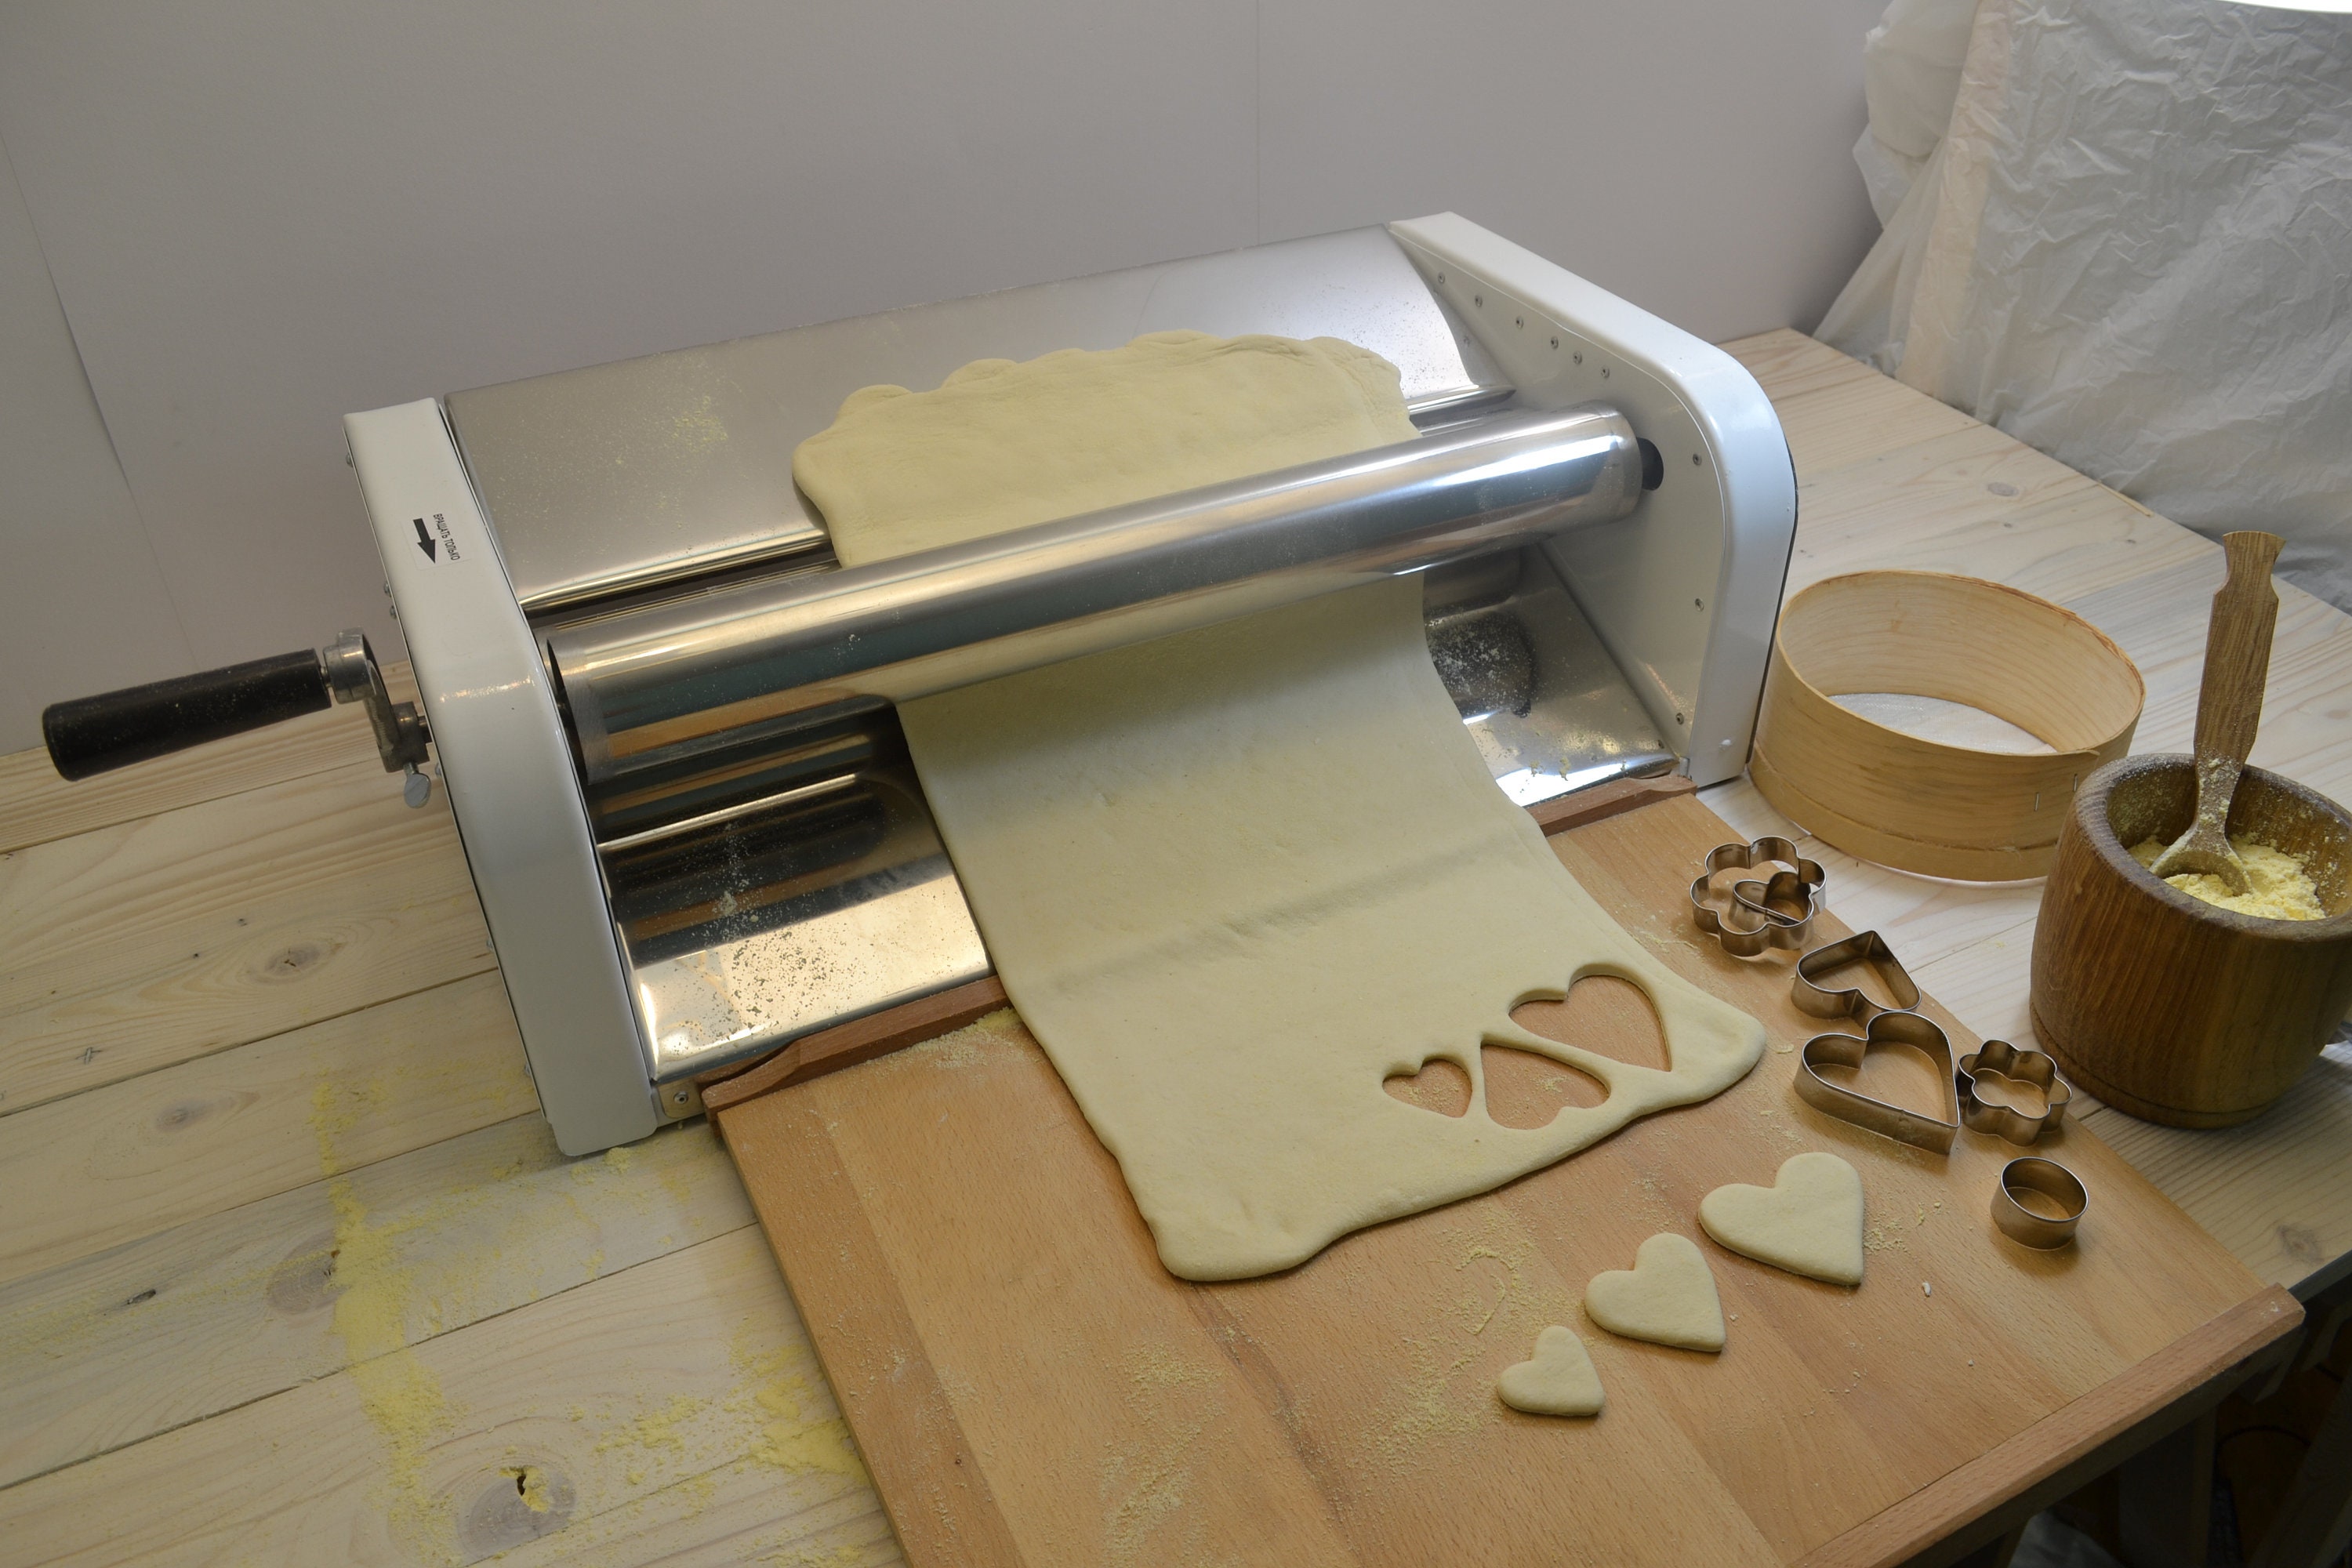 Manual dough sheeter on table